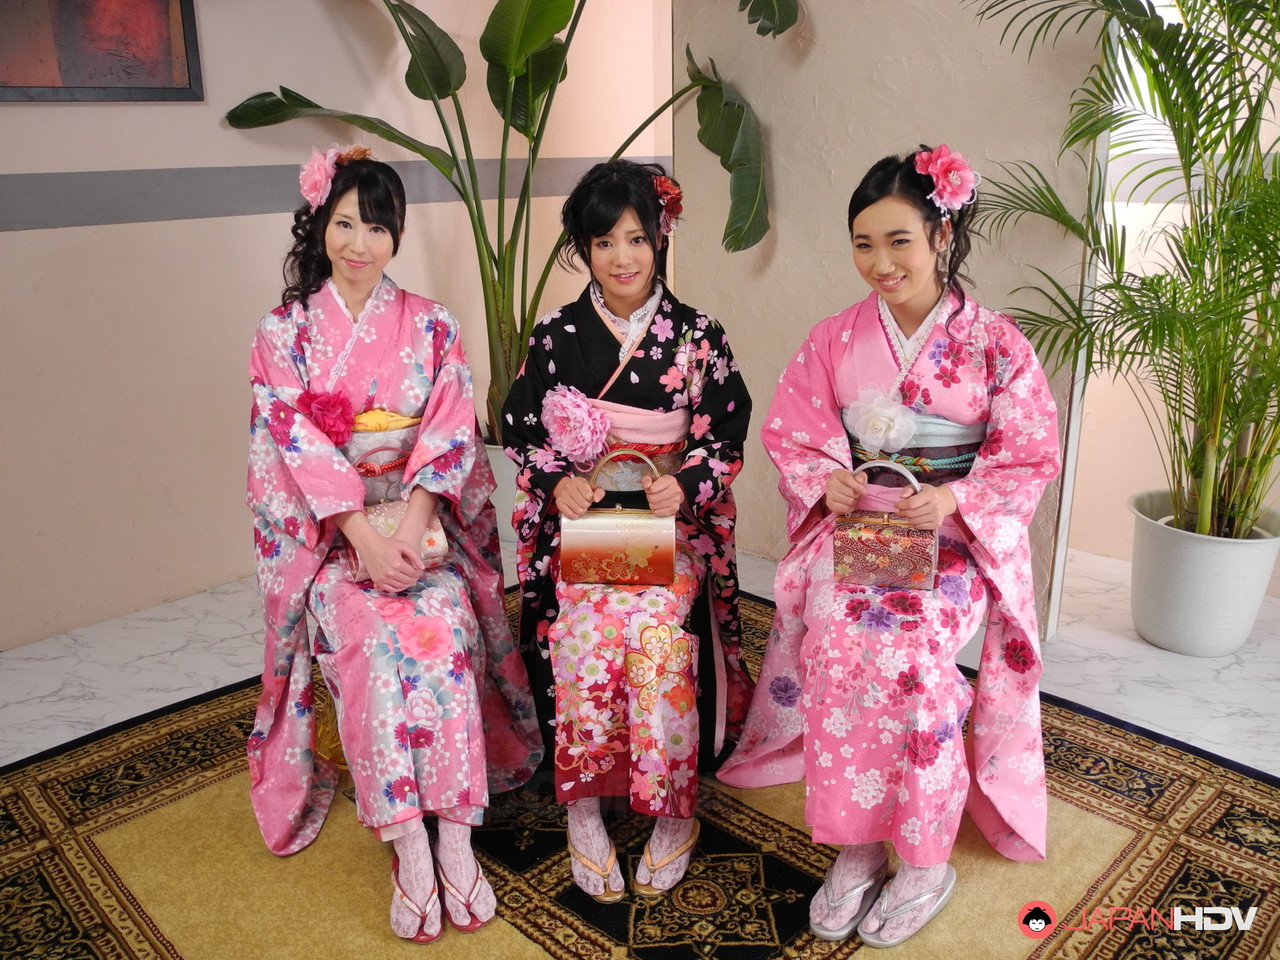 Sexy Asian girl Hina & her friends suck a dick wearing traditional Asian robes 포르노 사진 #424210118 | Japan HDV Pics, Hina, Sanae Momoi, Uta Kohaku, CFNM, 모바일 포르노